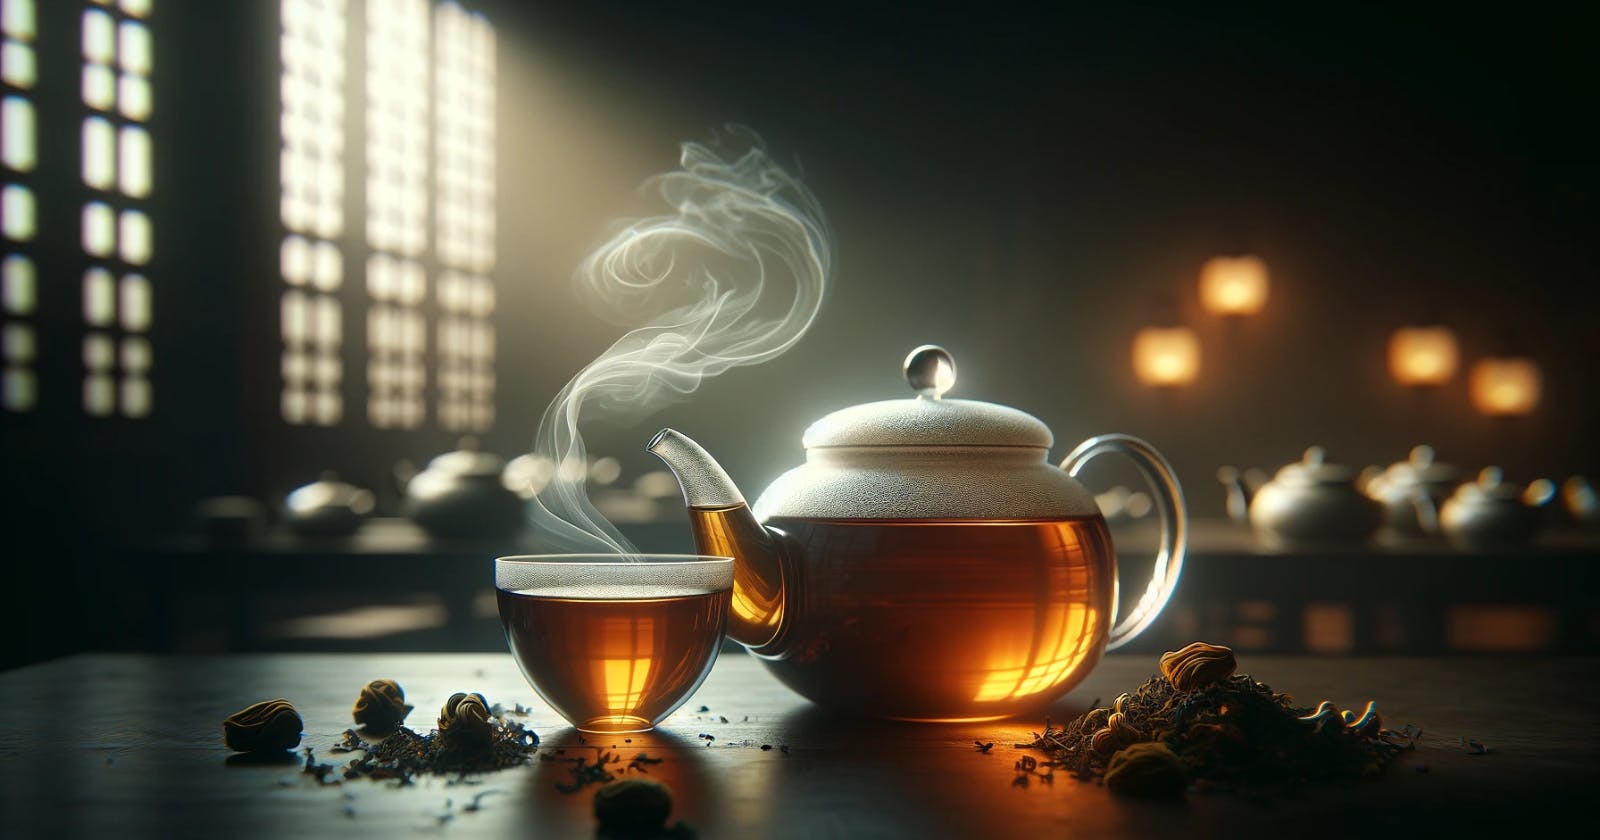 What Does Oolong Tea Taste Like?